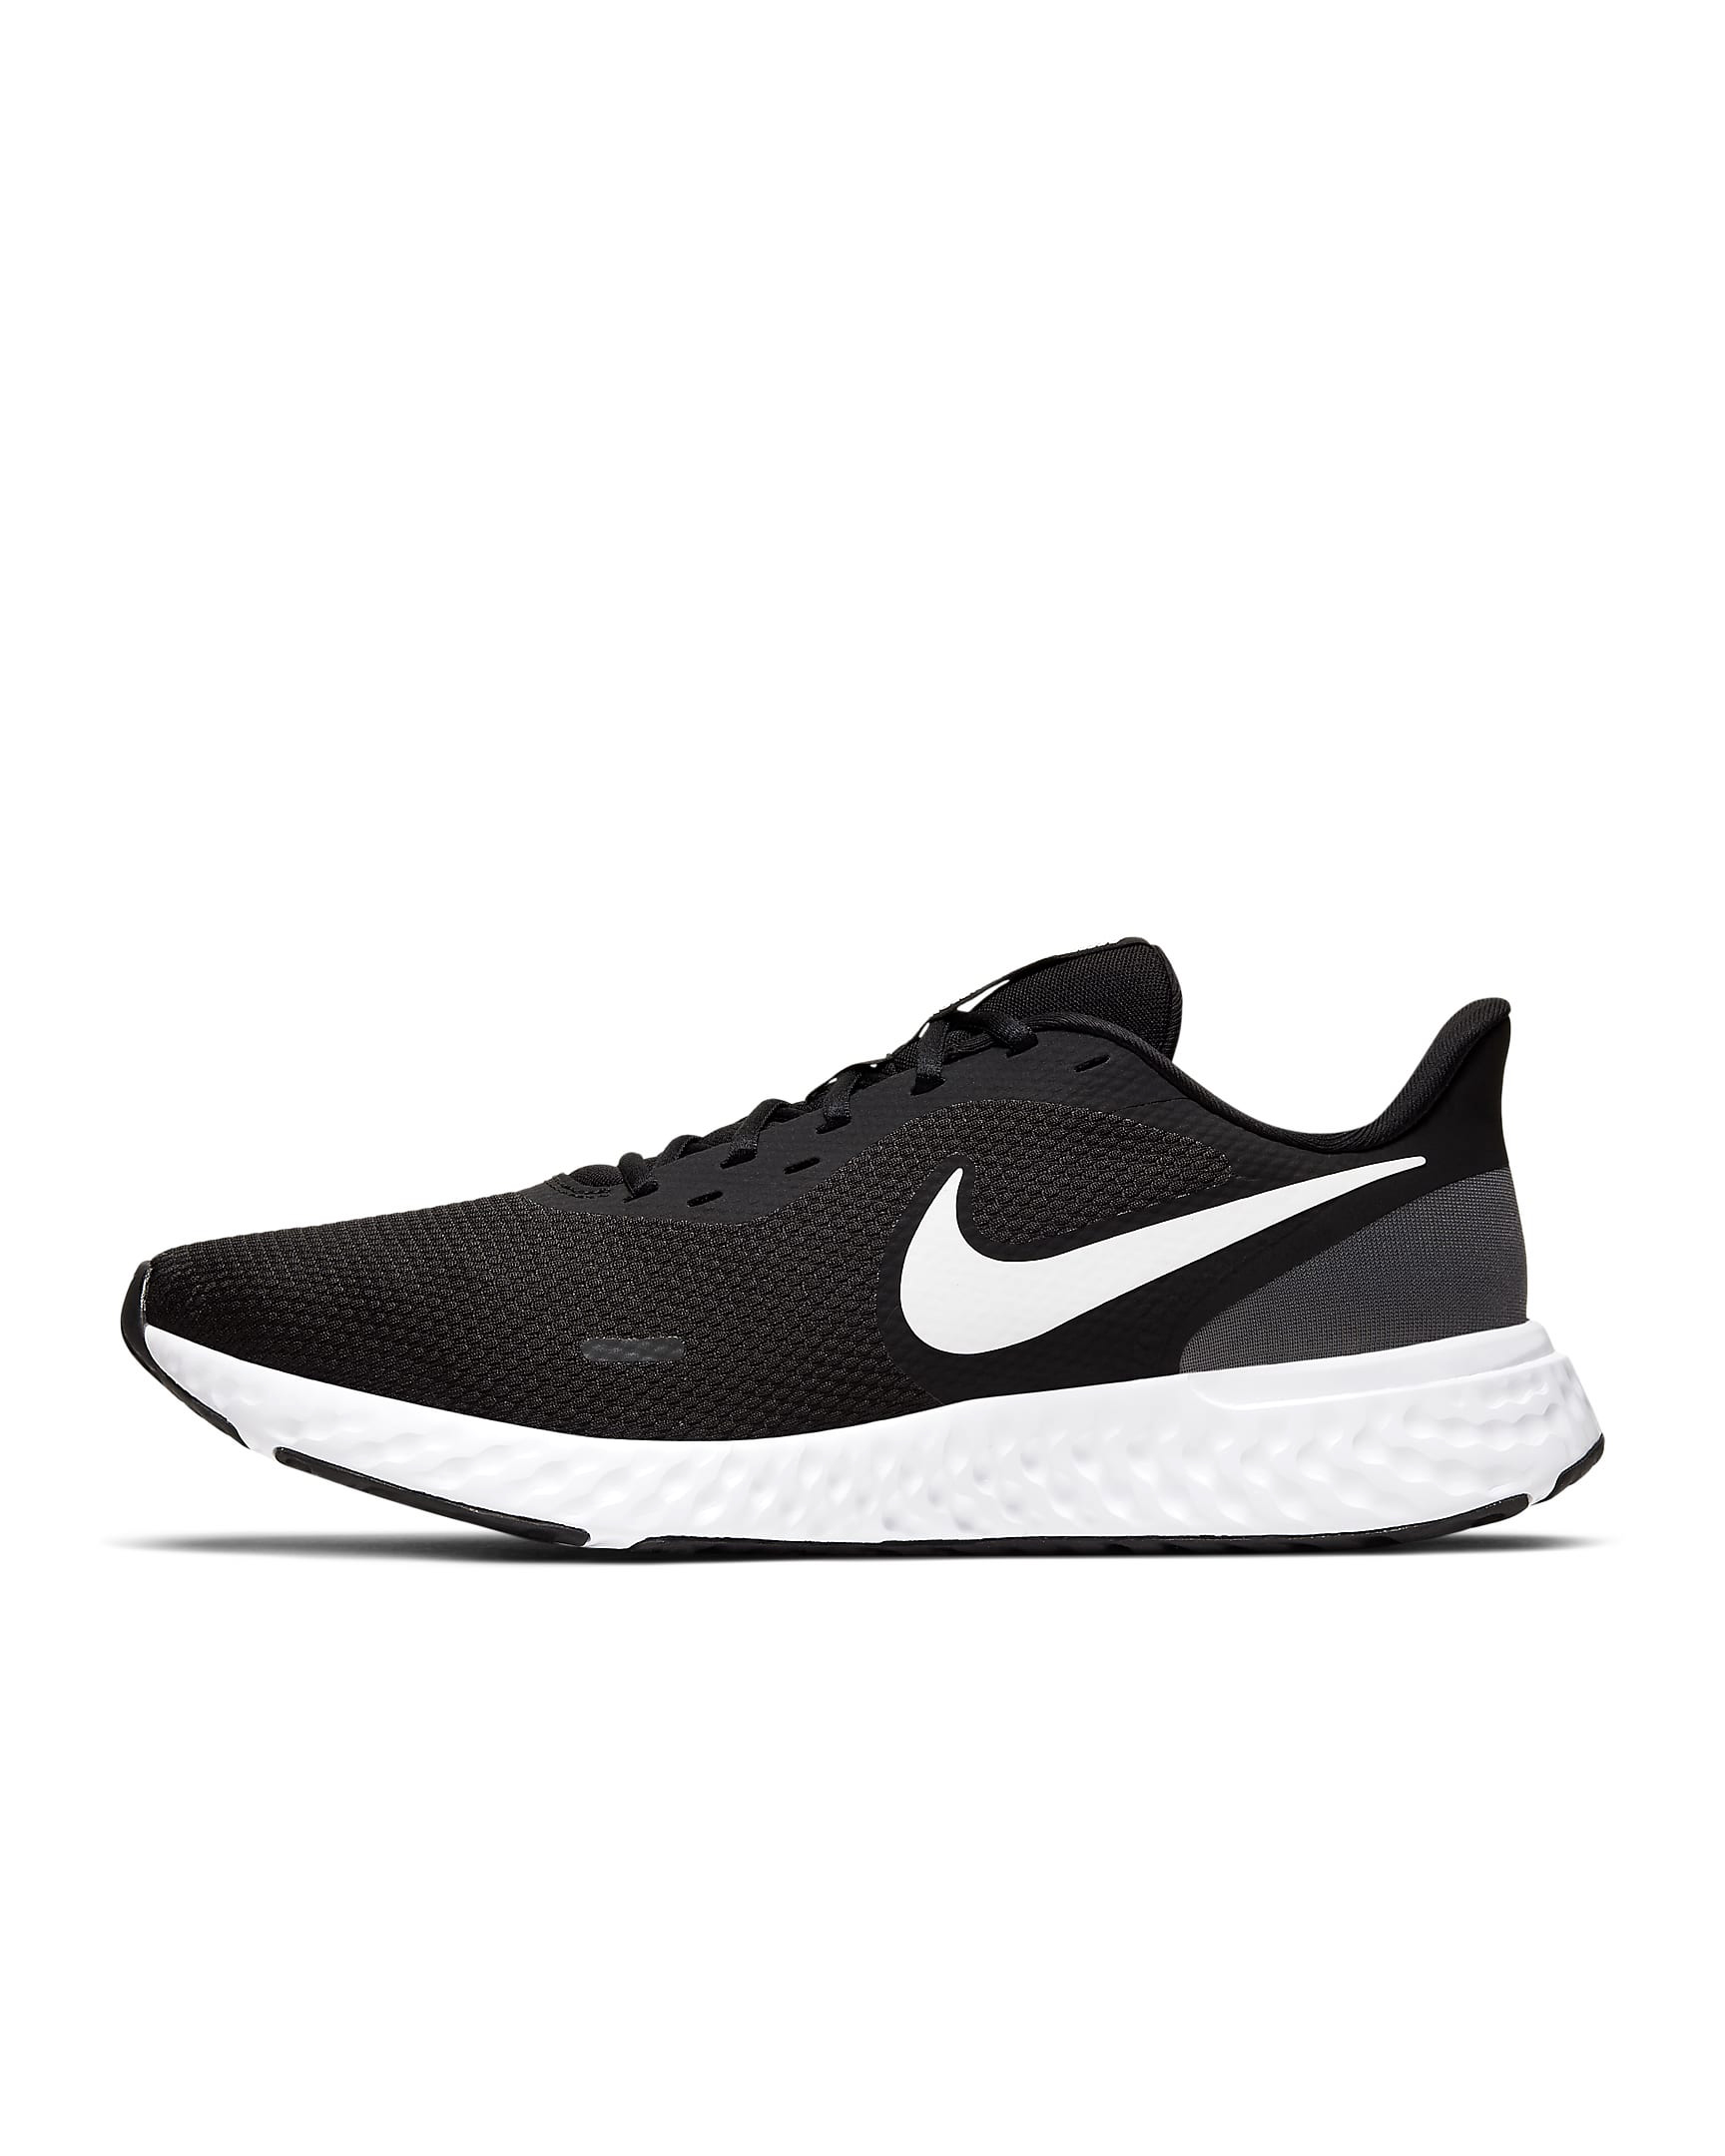 Men's Nike Revolution 5 Black/White-Anthracite (BQ3204 002) - 10.5 - image 1 of 7